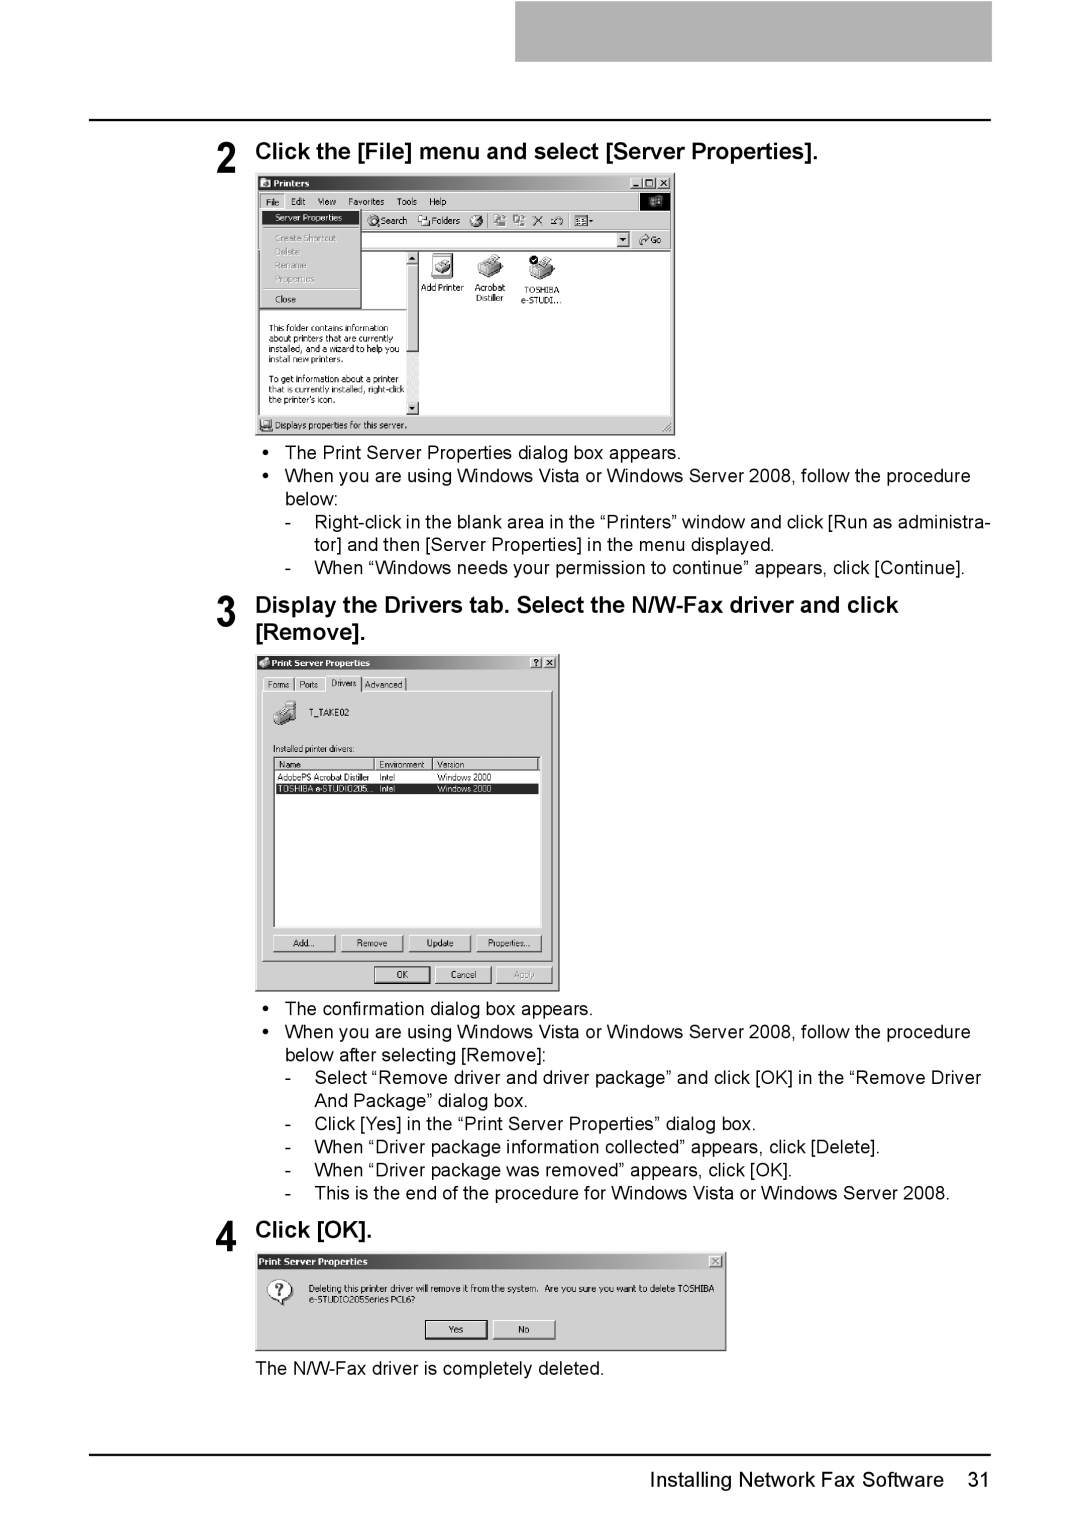 Toshiba GA-1191 manual Click the File menu and select Server Properties, Click OK 